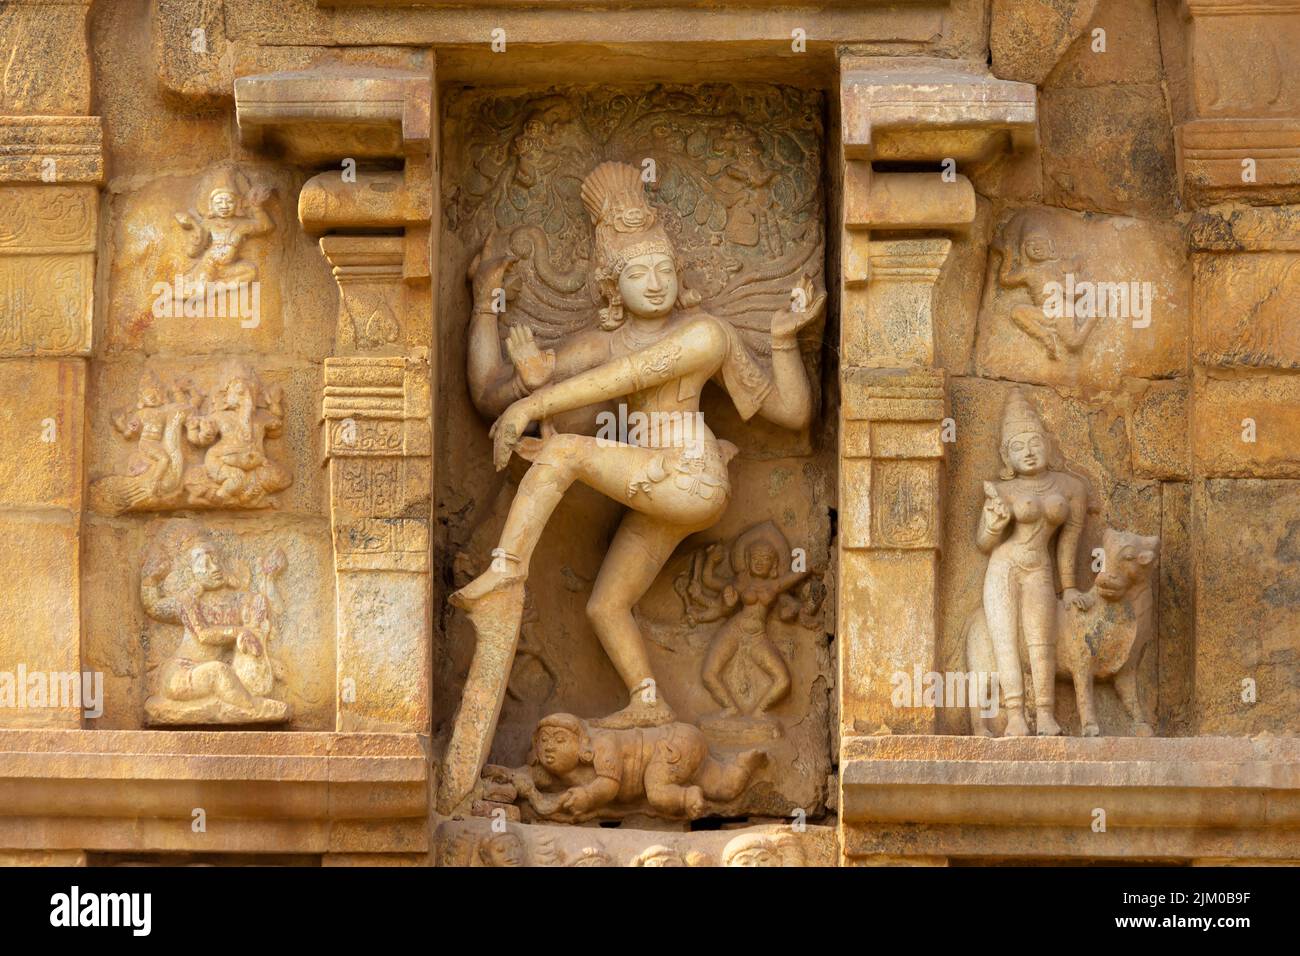 Escultura del Señor Shiva en la pared del Templo Brihadeshwara, Gangaikonda Cholapuram, Ariyalur, Tamilnadu, India. Foto de stock